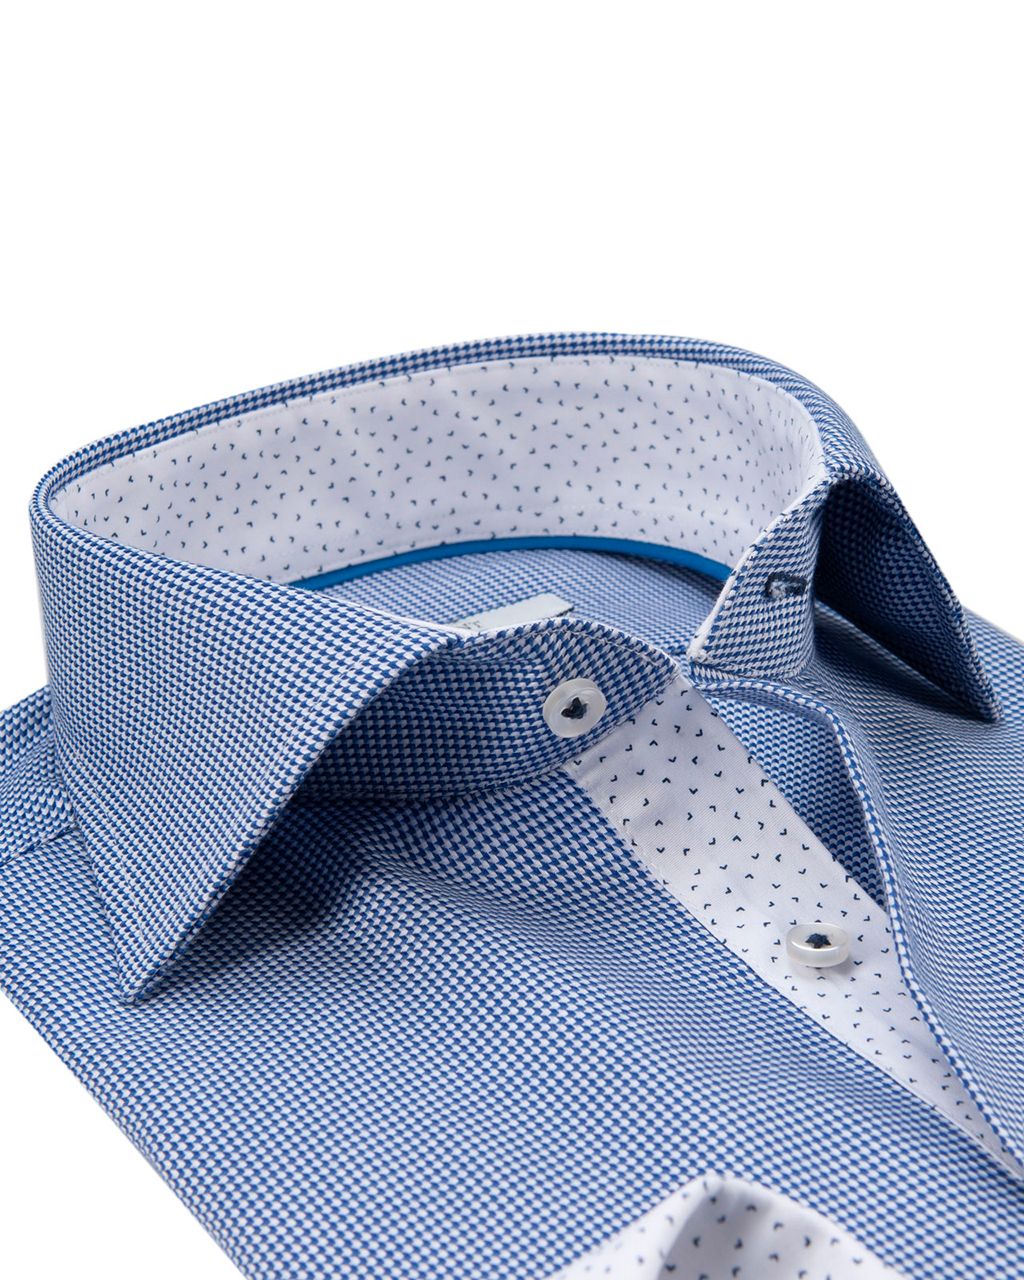 The BLUEPRINT Premium Trendy overhemd LM Donkerblauw dessin 053713-001-L